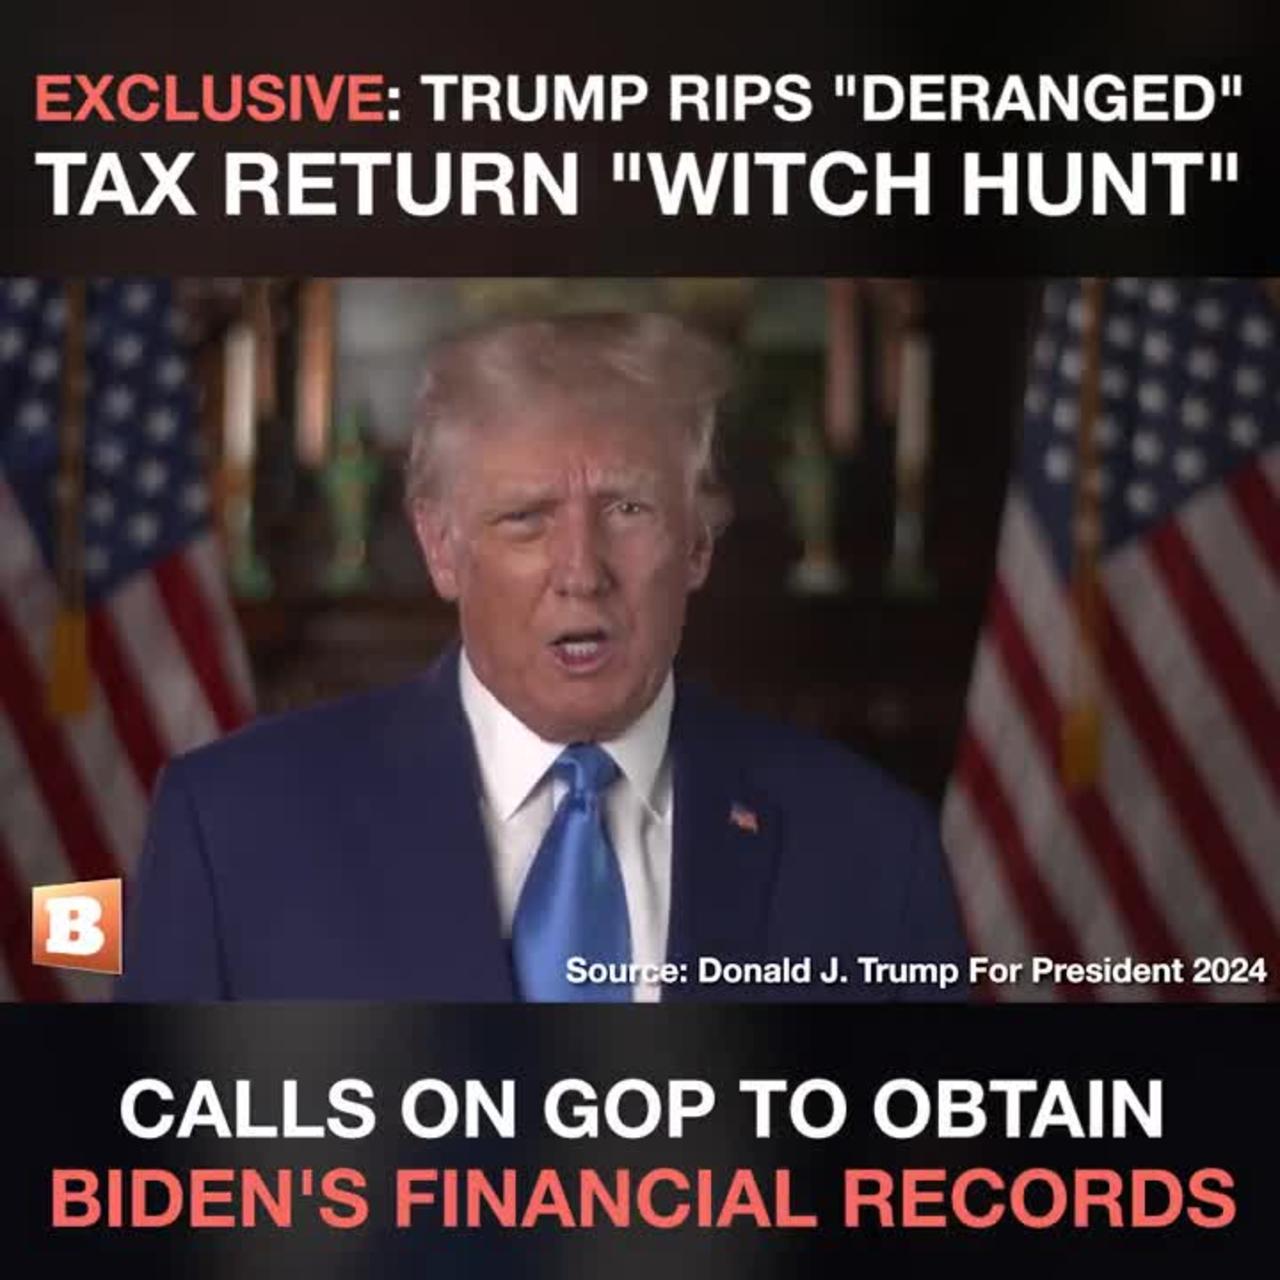 Trump RIPS "Deranged" Tax Return "Witch Hunt", Calls on GOP to Obtain Biden's Financial Records